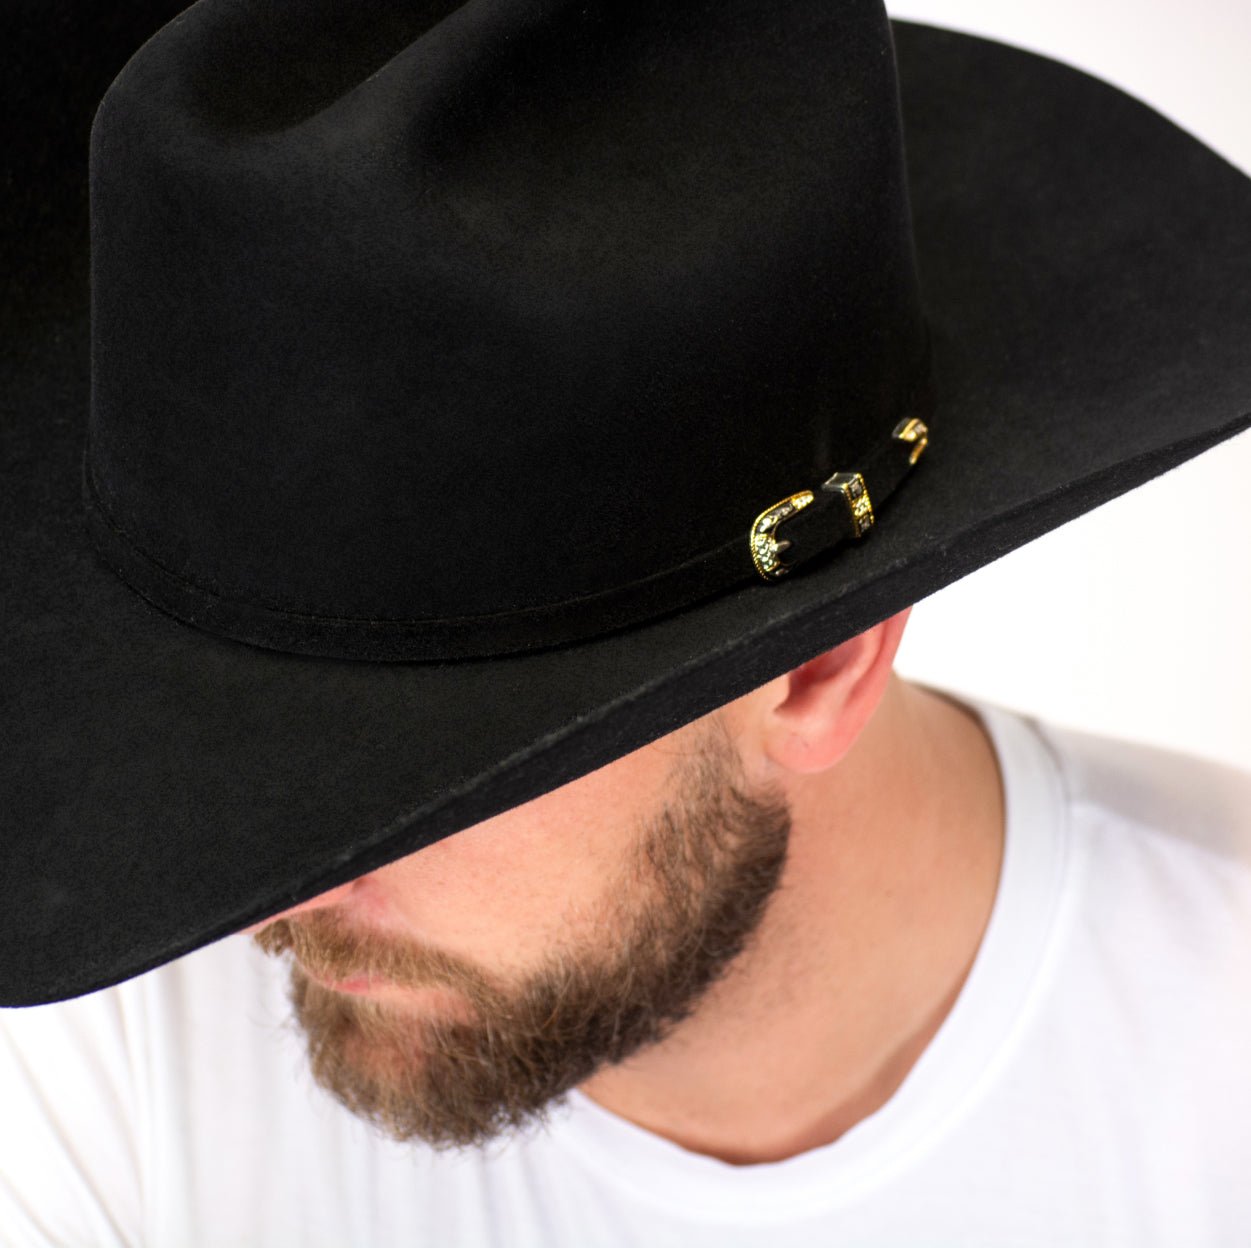 Yellowstone x Bailey Cowboy Western 10x Hat - Paramount Shop